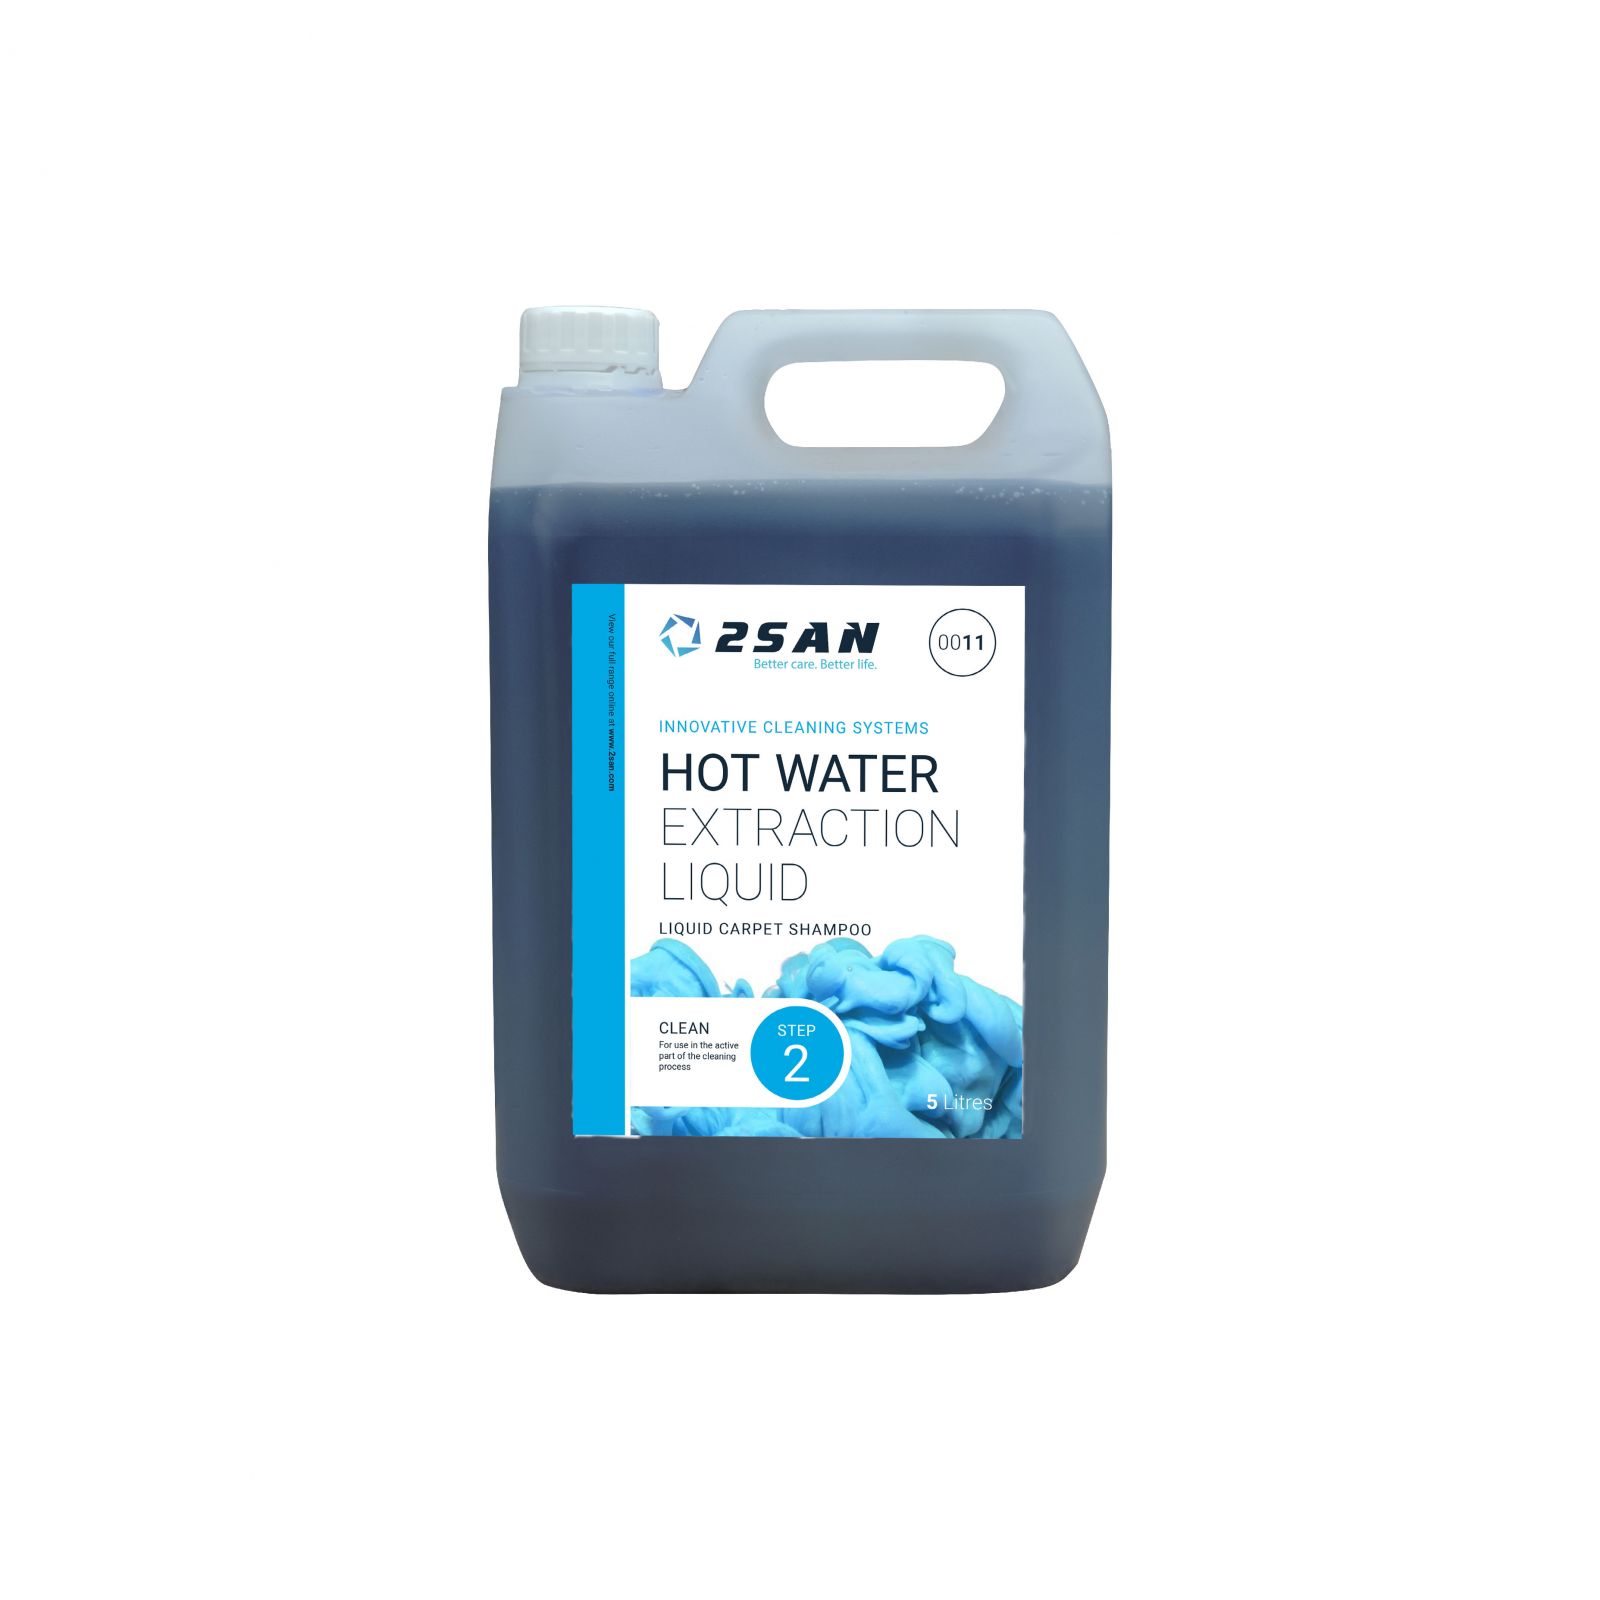 2San Hot Water Extraction Liquid, 5L